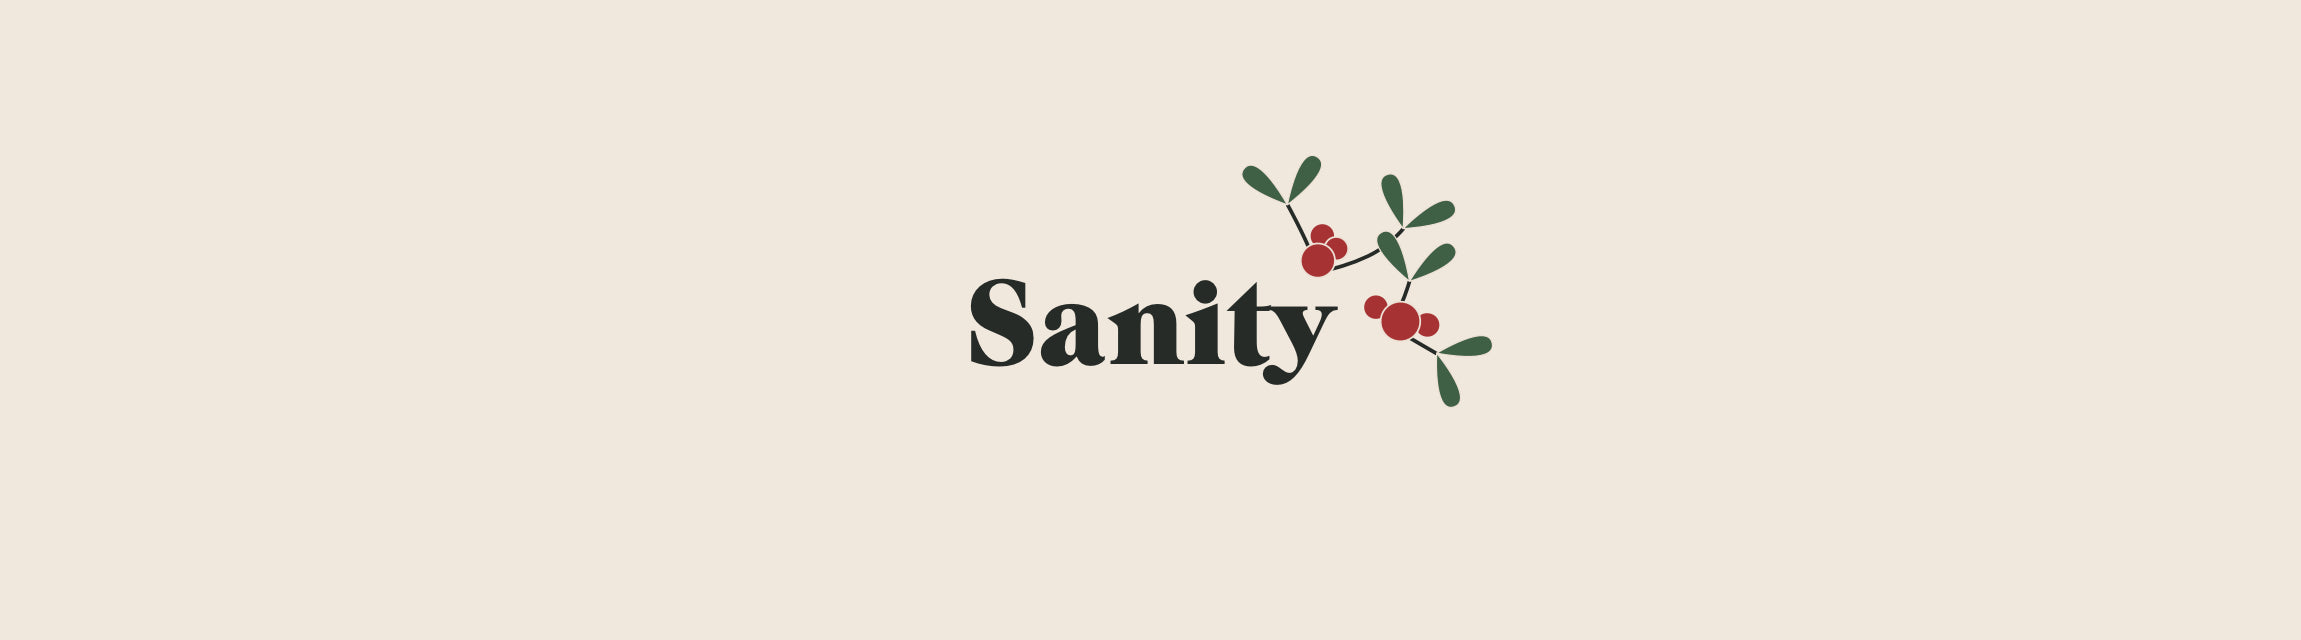 Sanity title with mistletoe icon